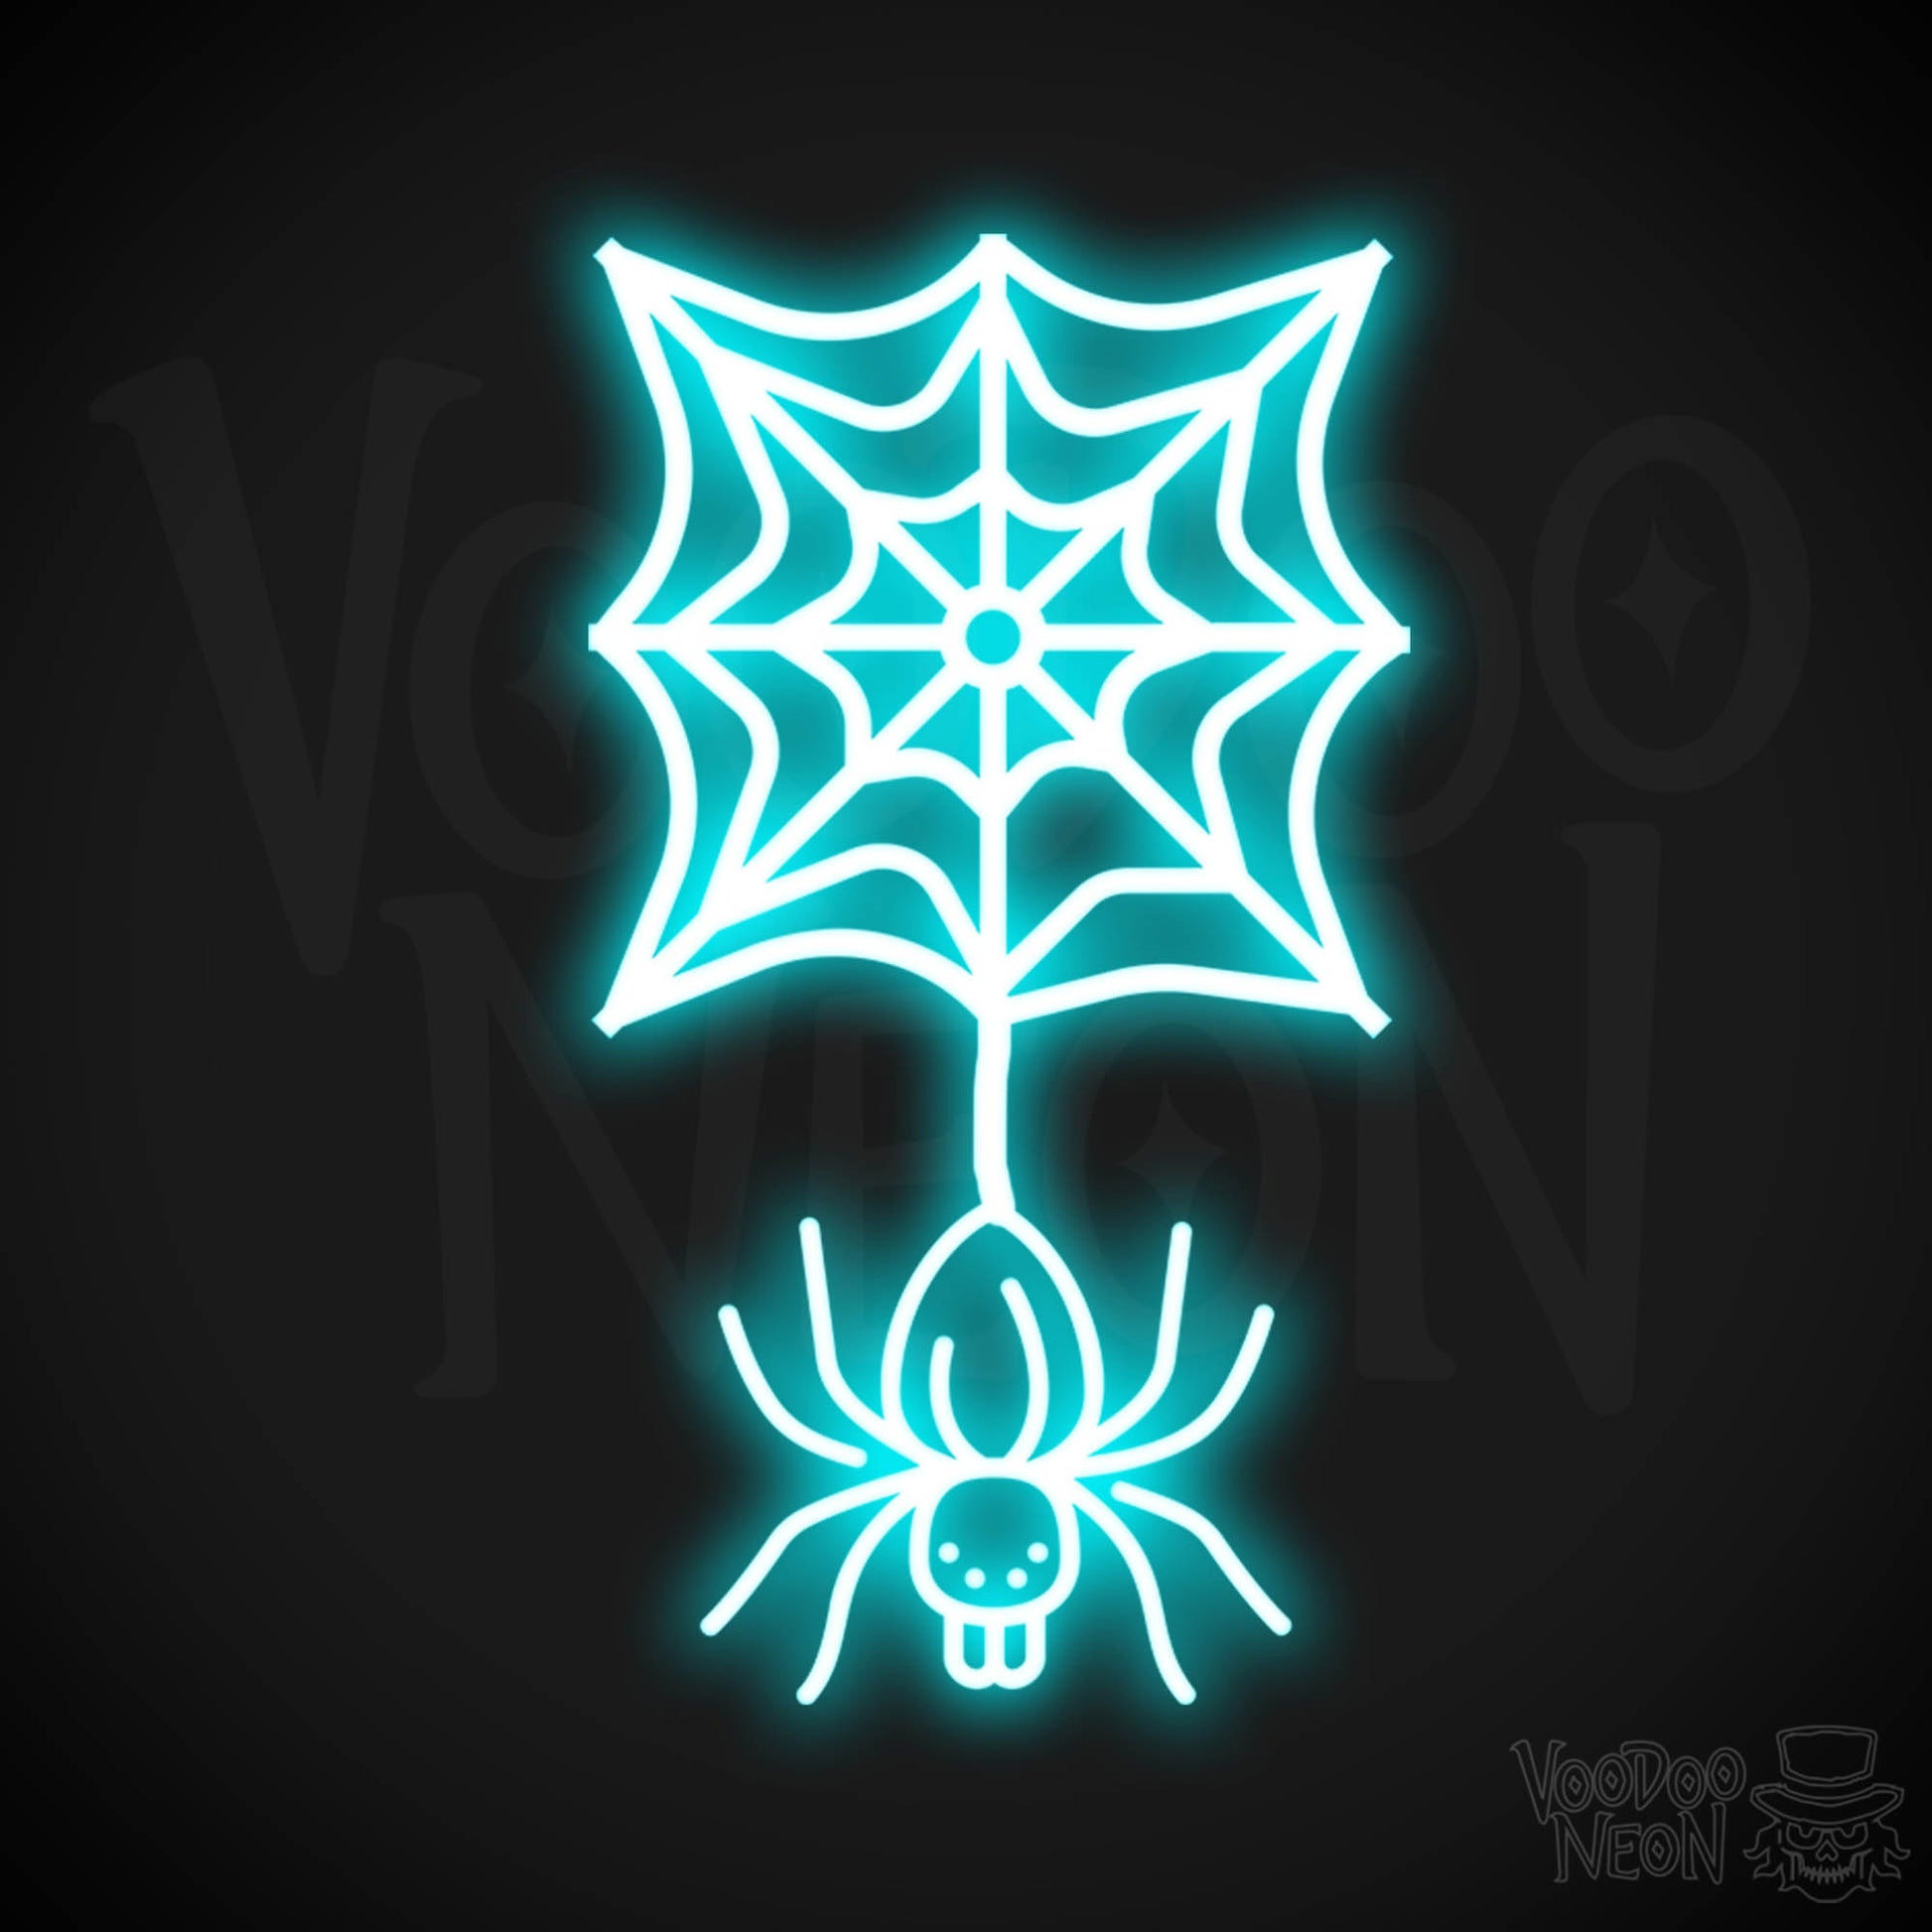 Neon Spider - Spider Neon Sign - Halloween LED Neon Spider - Color Ice Blue